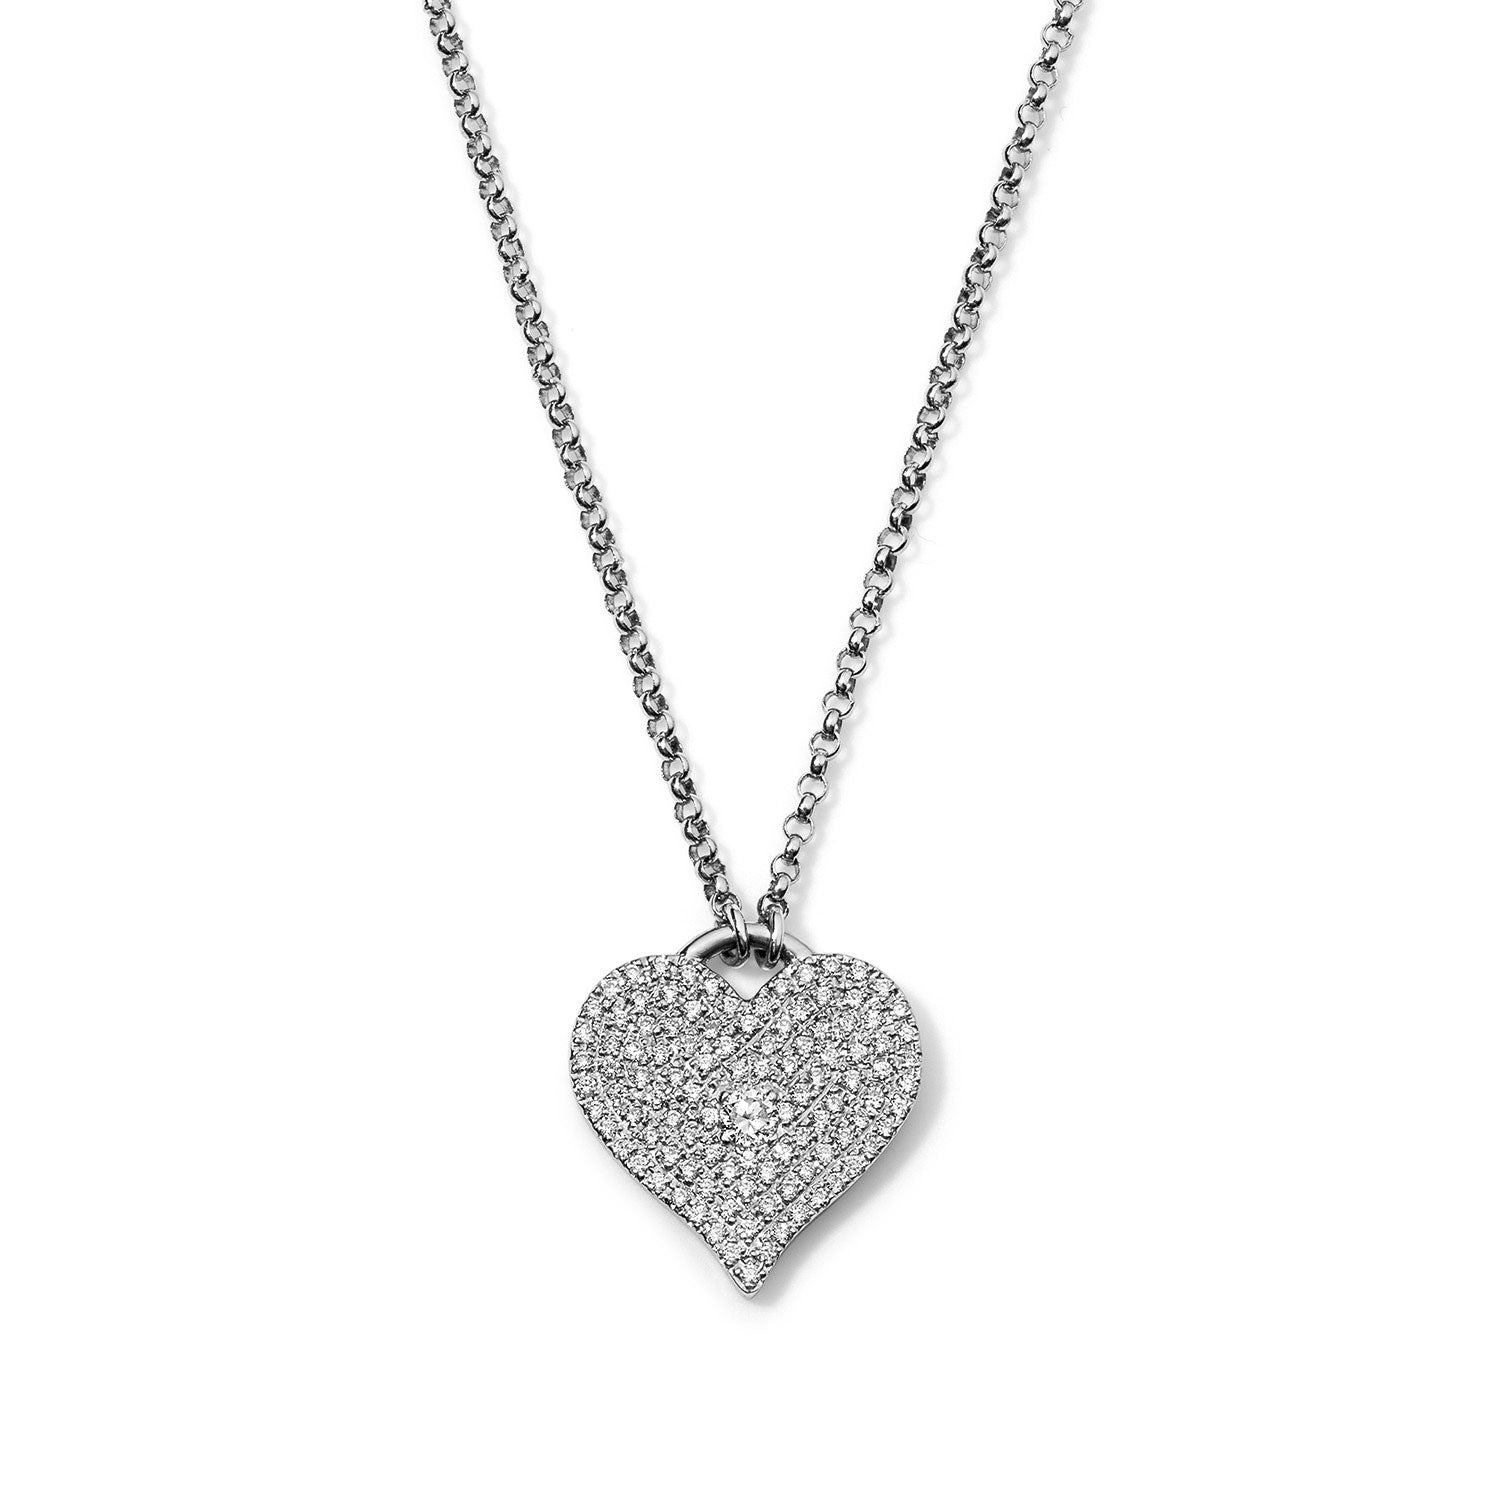 Heartfelt Gold and Diamond Heart Necklace